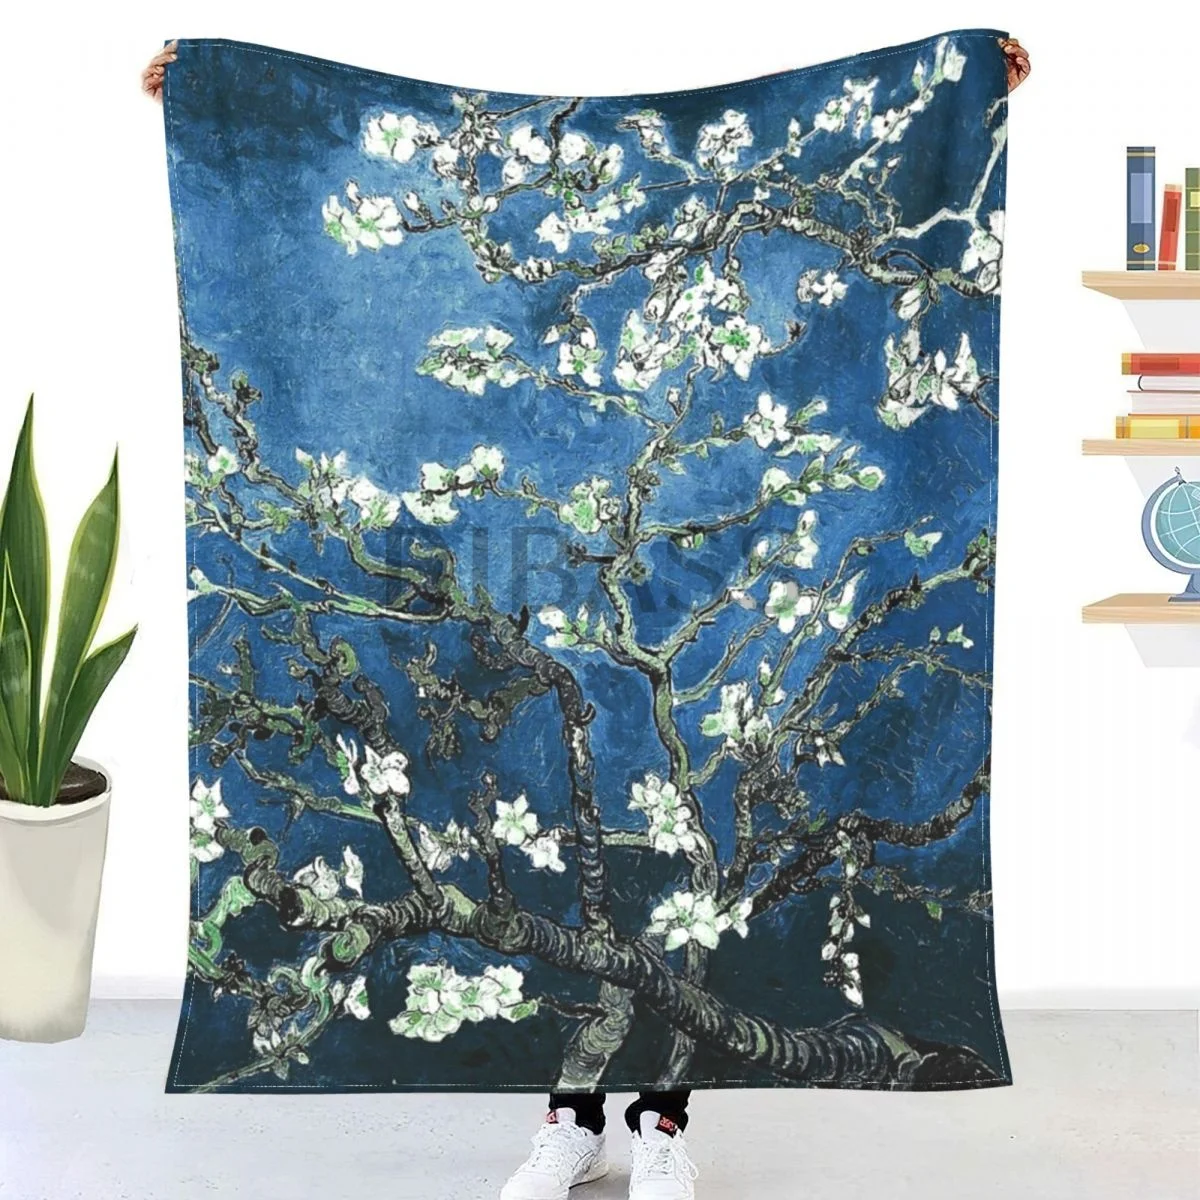 

Van Gogh Almond Blossoms Deep Ocean Blue Comforter 3D Printed Flannel Throw Blanket